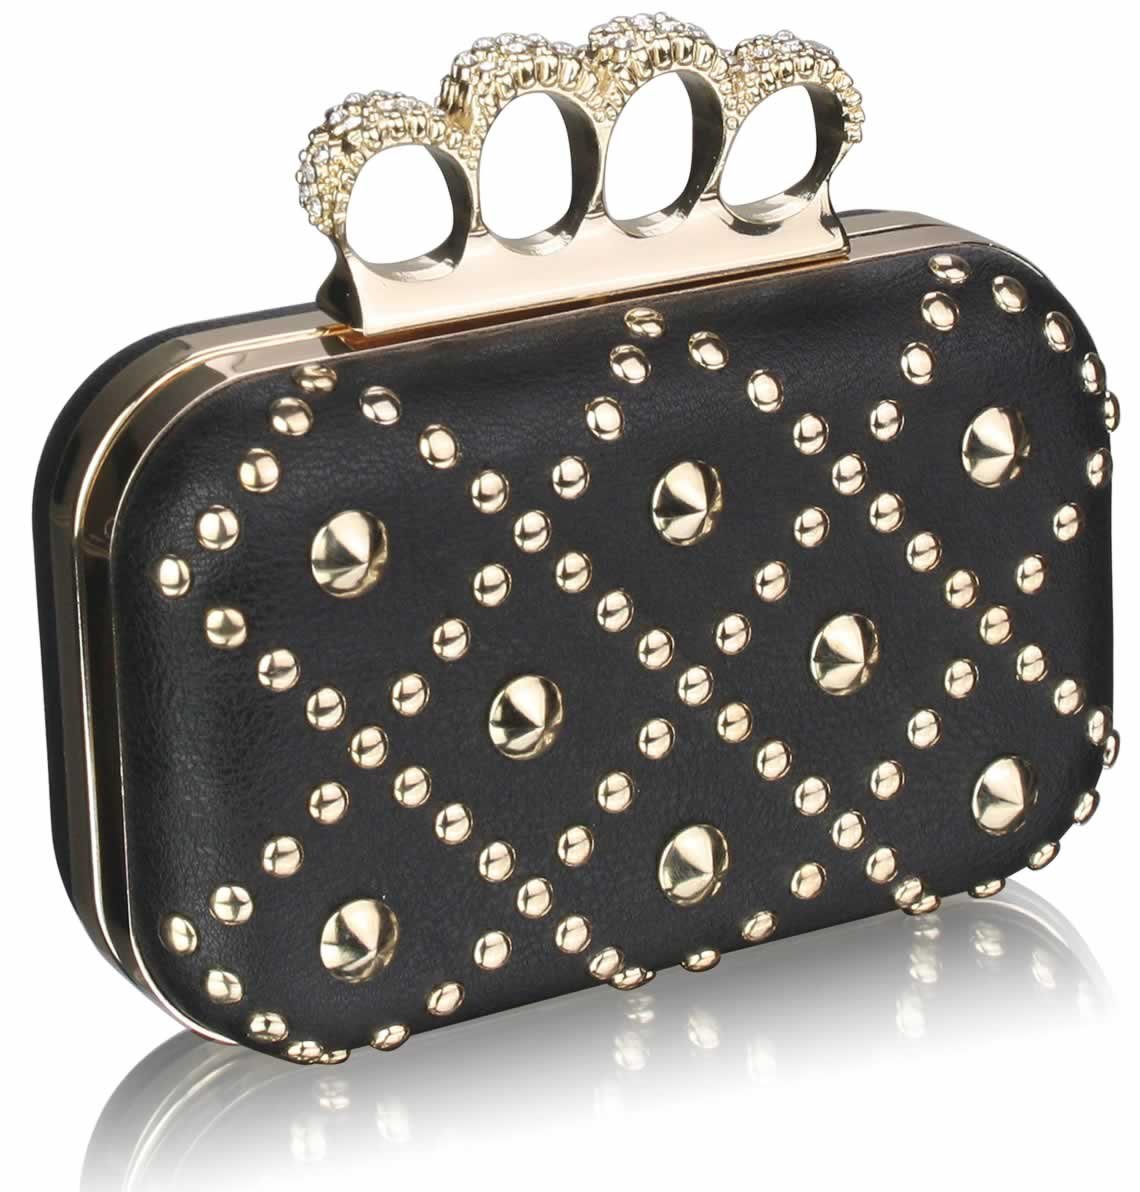 Wholesale Black Sparkly Crystal Satin Clutch purse